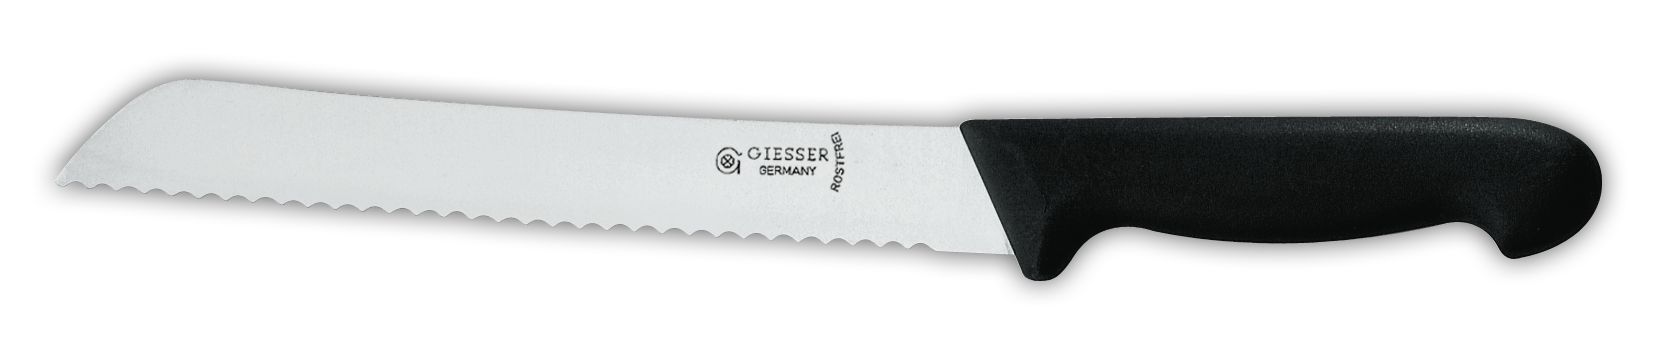 Нож для хлеба 8355 w  с волнистым лезвием, 25t см,   рукоятка